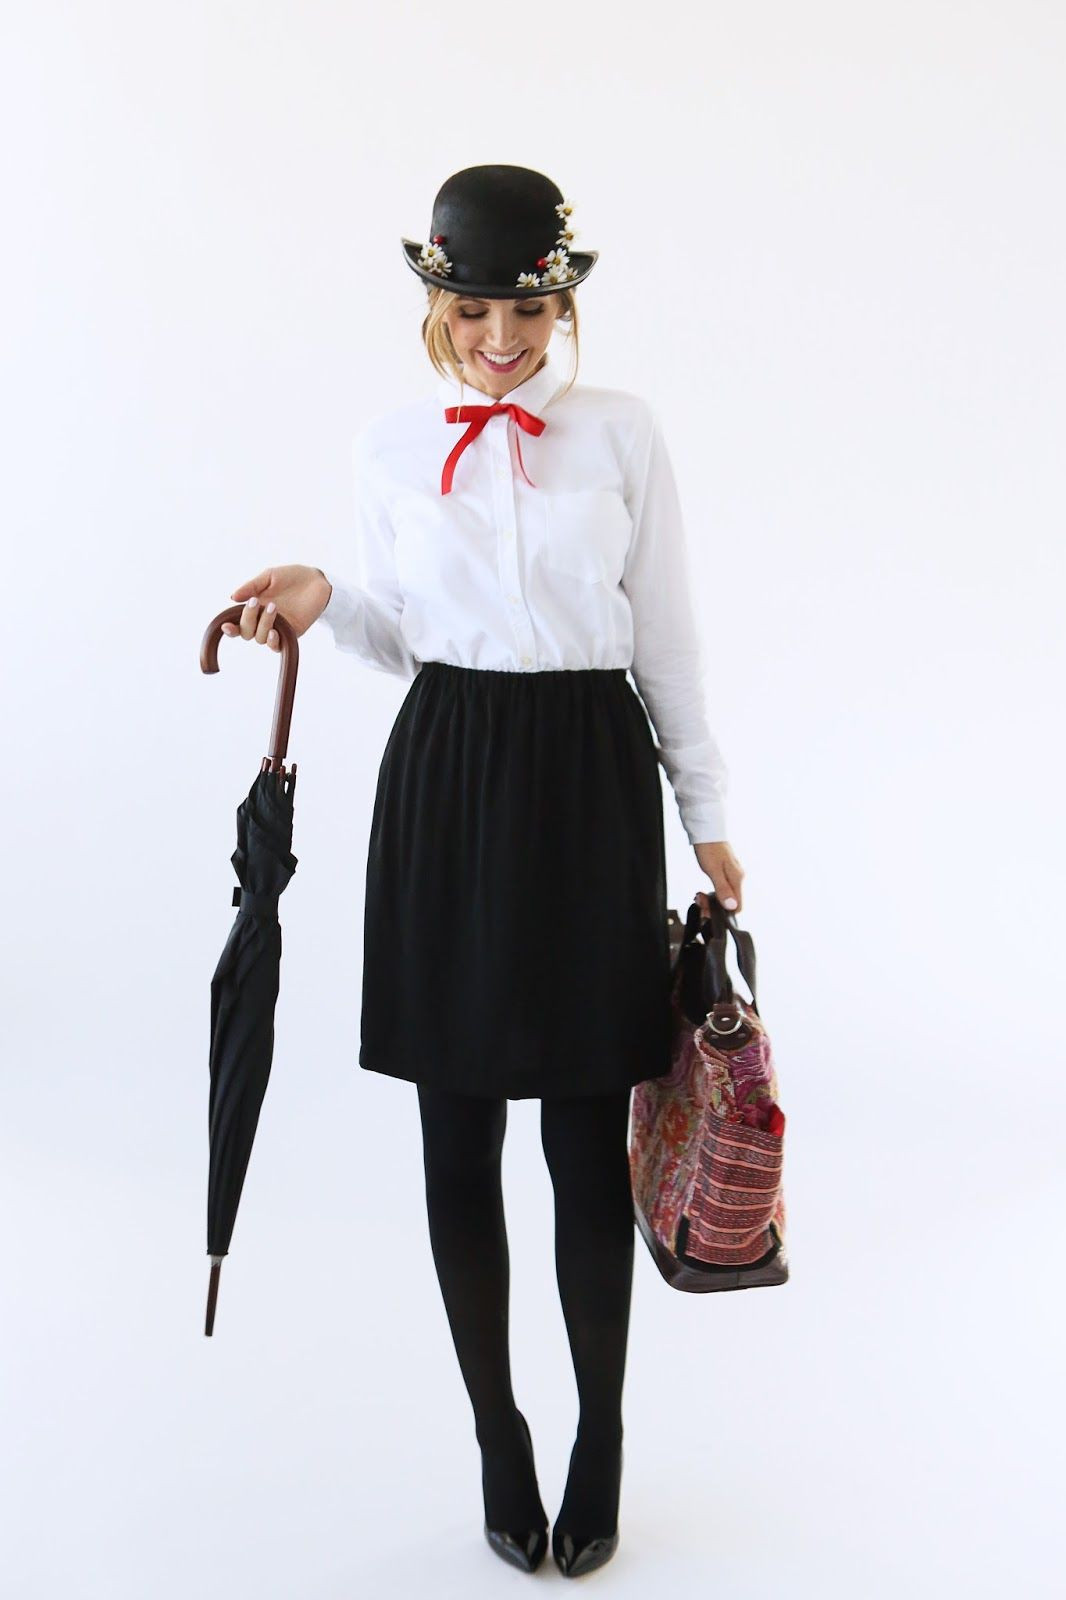 Mary Poppins Costume DIY
 MODERN GIRL S HALLOWEEN WEEK MARY POPPINS COSTUME